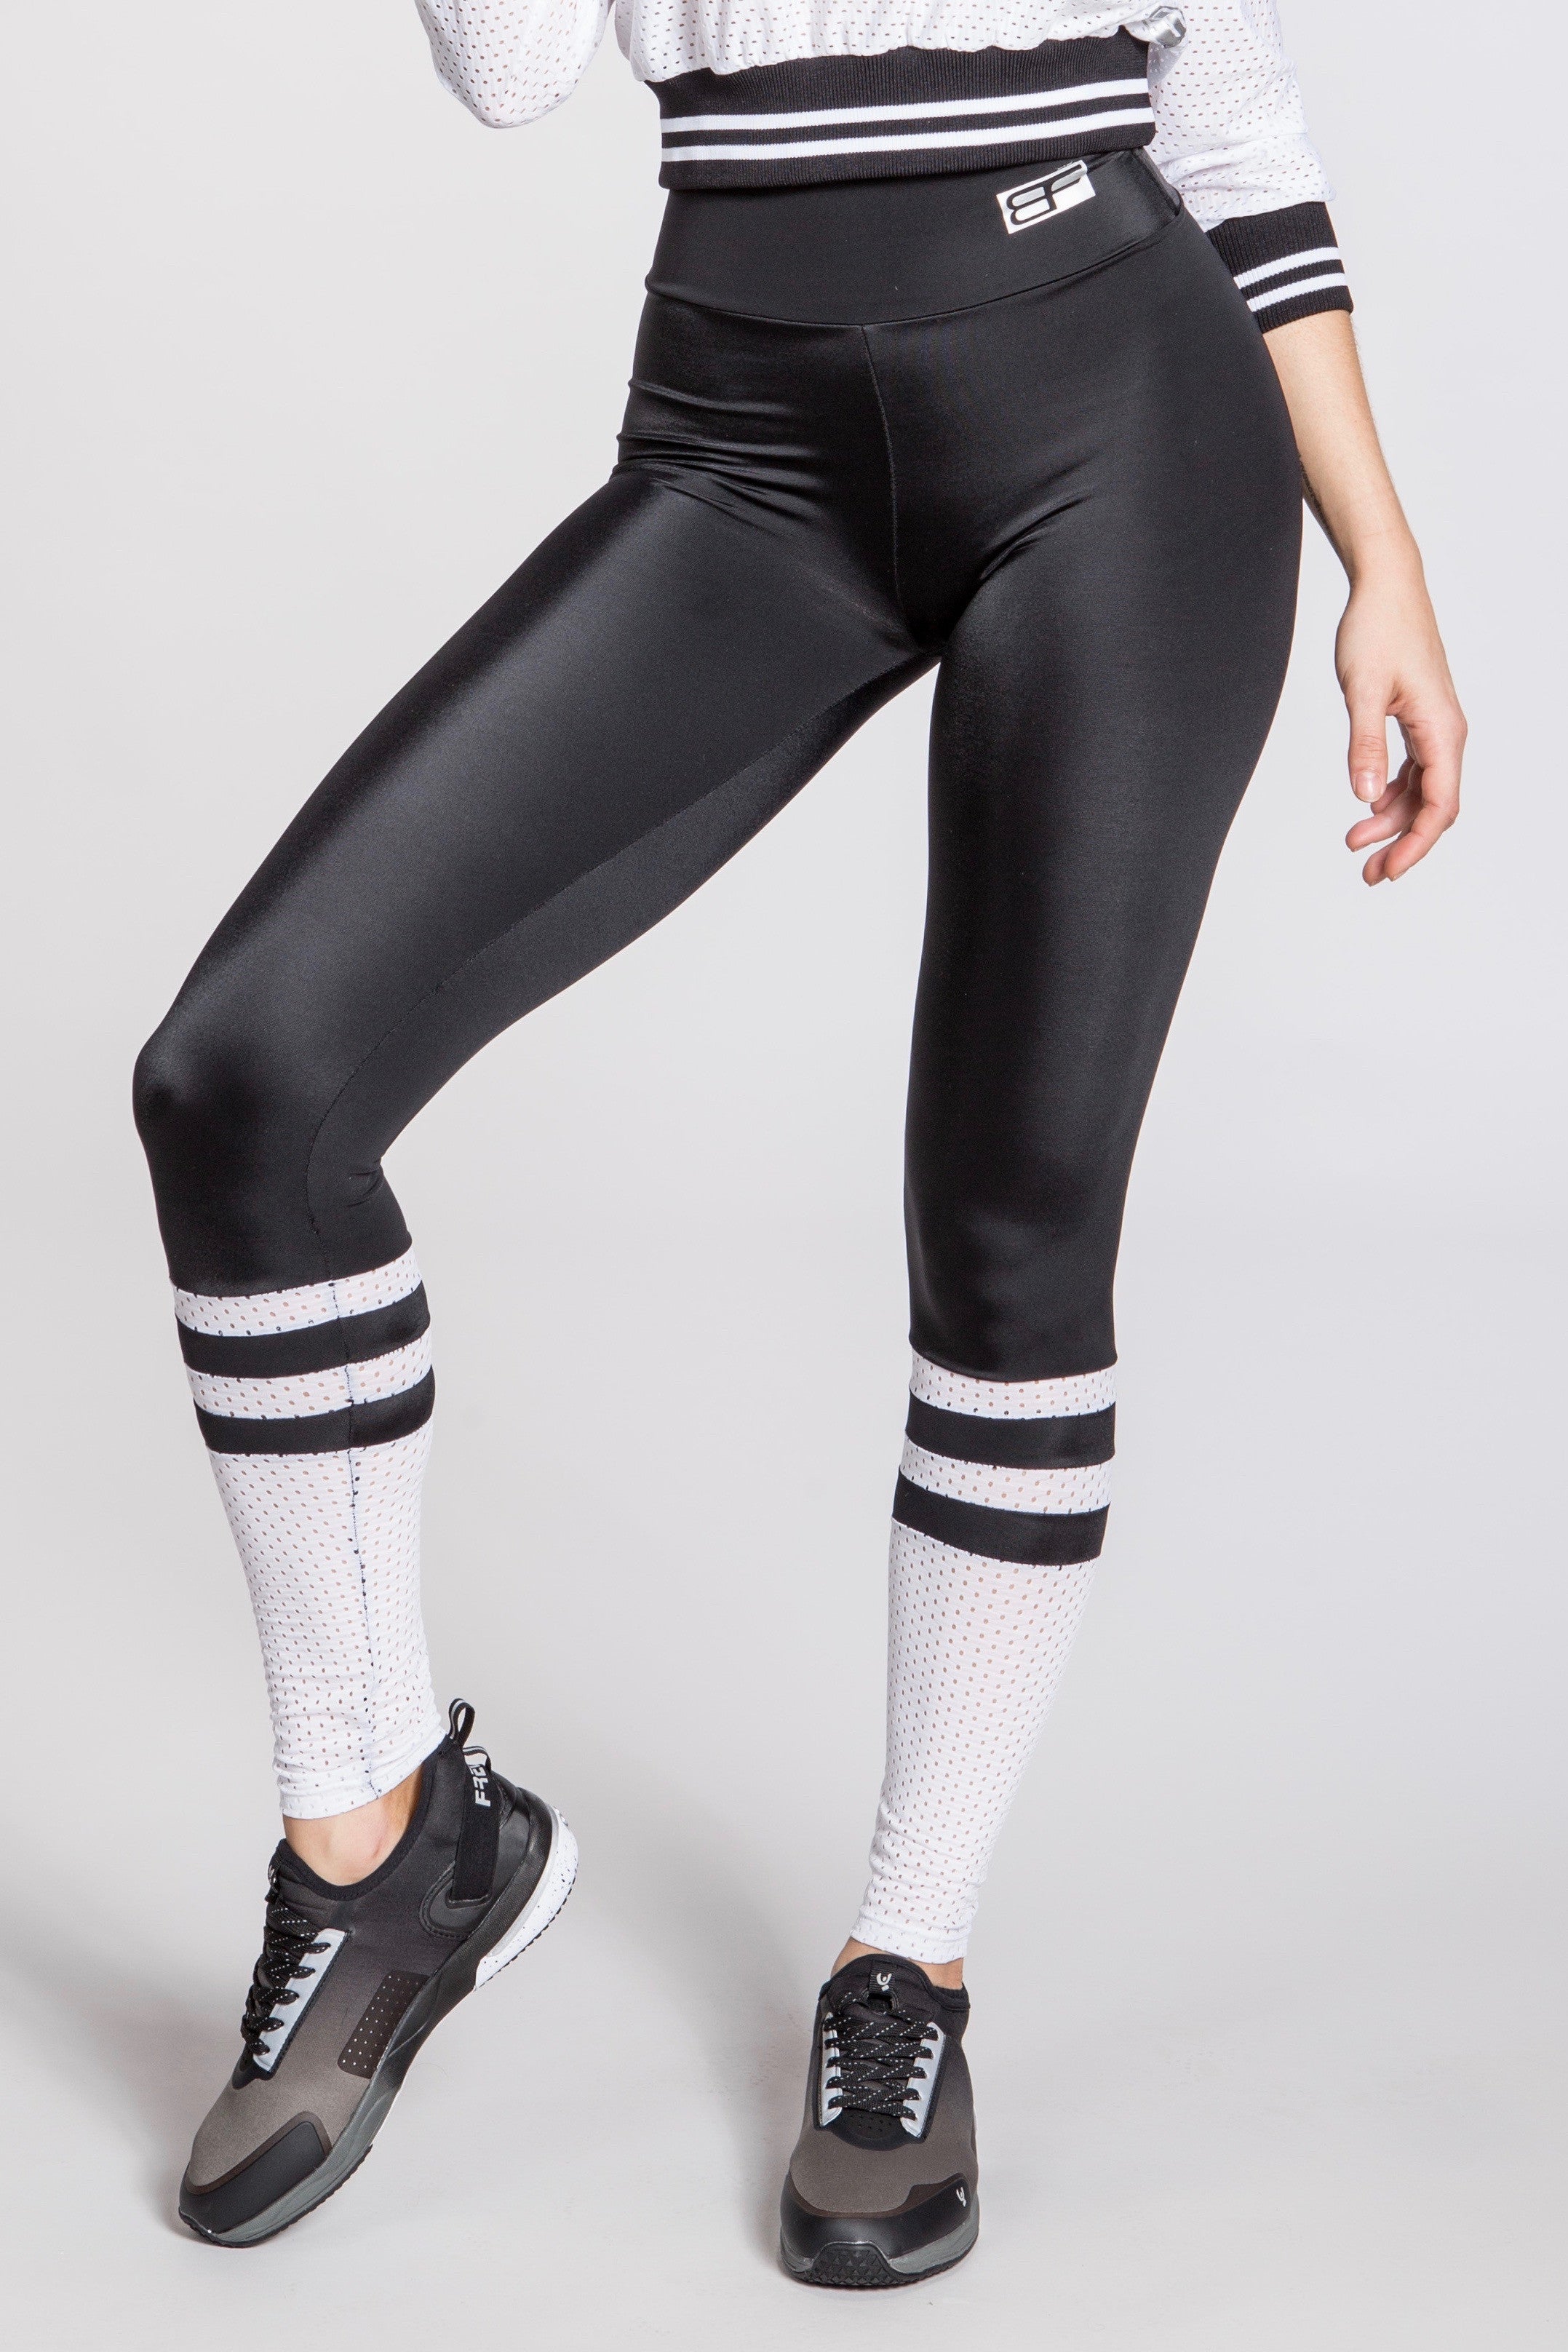 Hollister Black Grey Side Stripe Athletic Leggings Women's Size